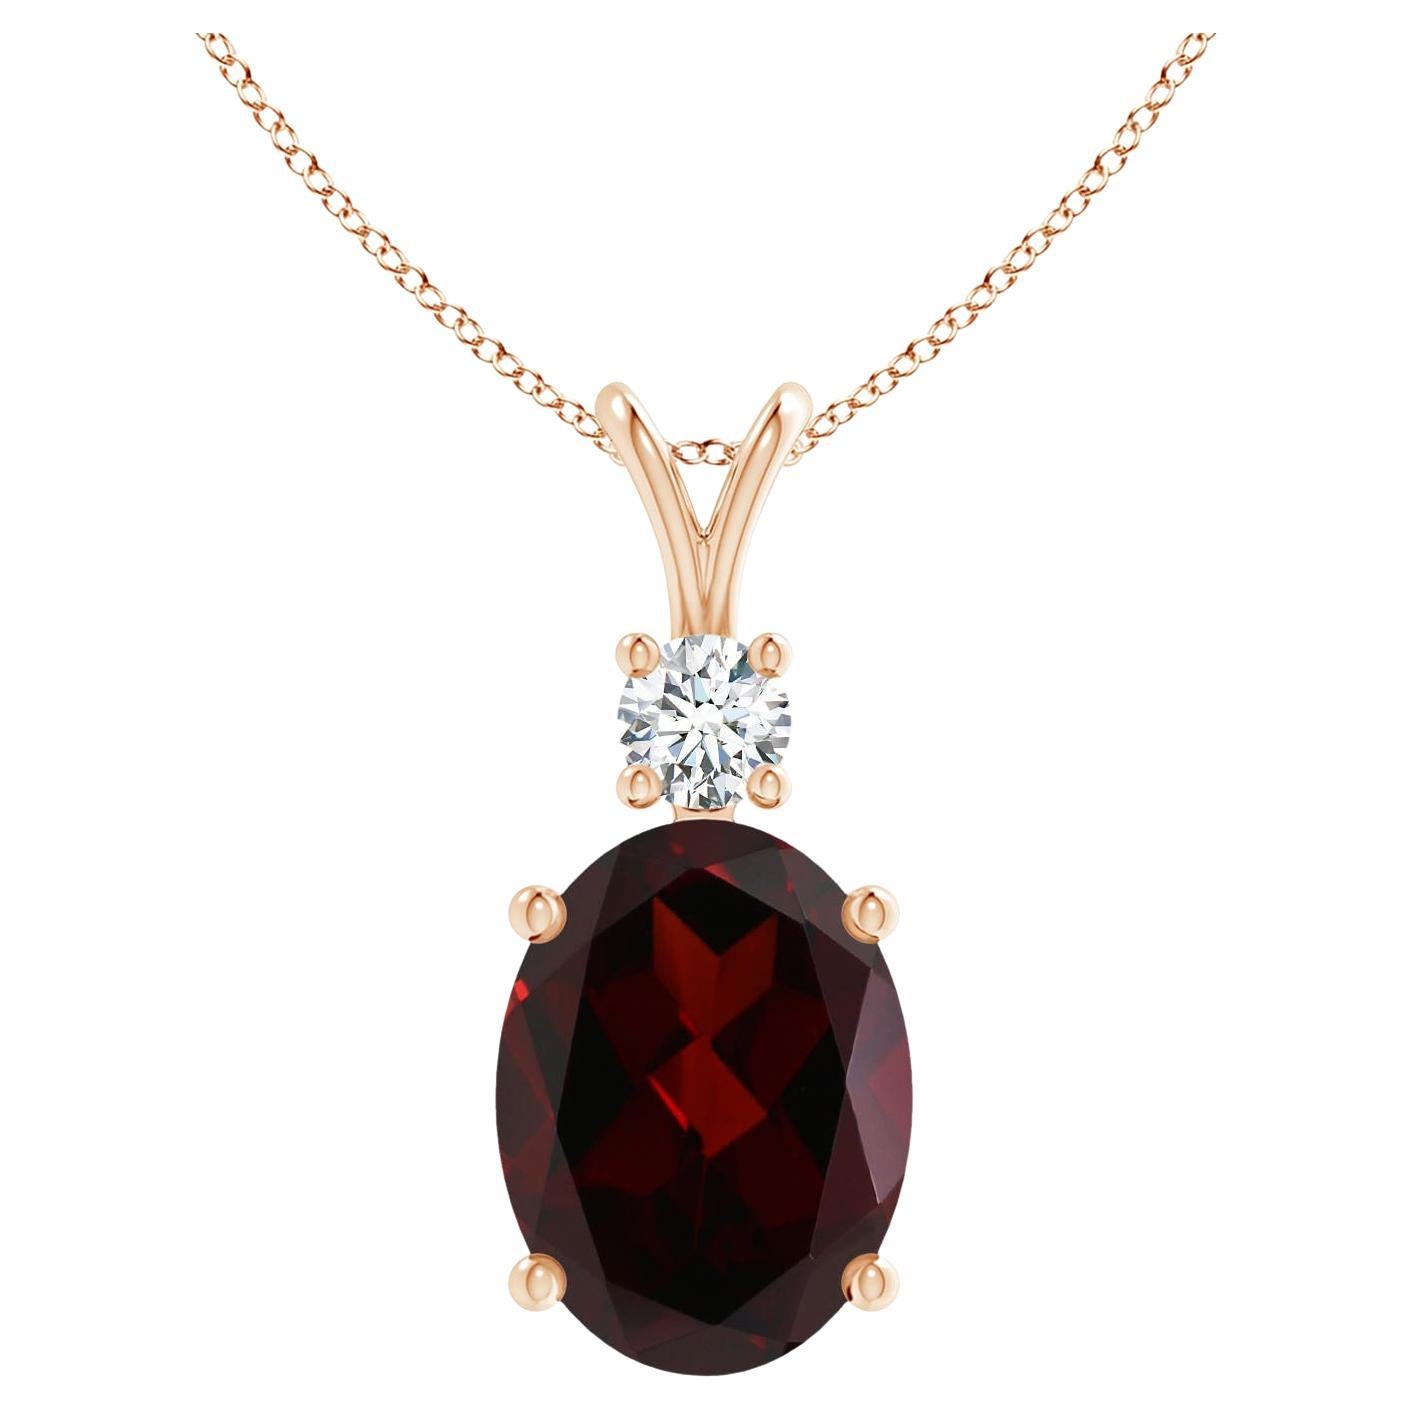 Angara Gia, collier pendentif en or rose et grenat naturel certifié avec diamants